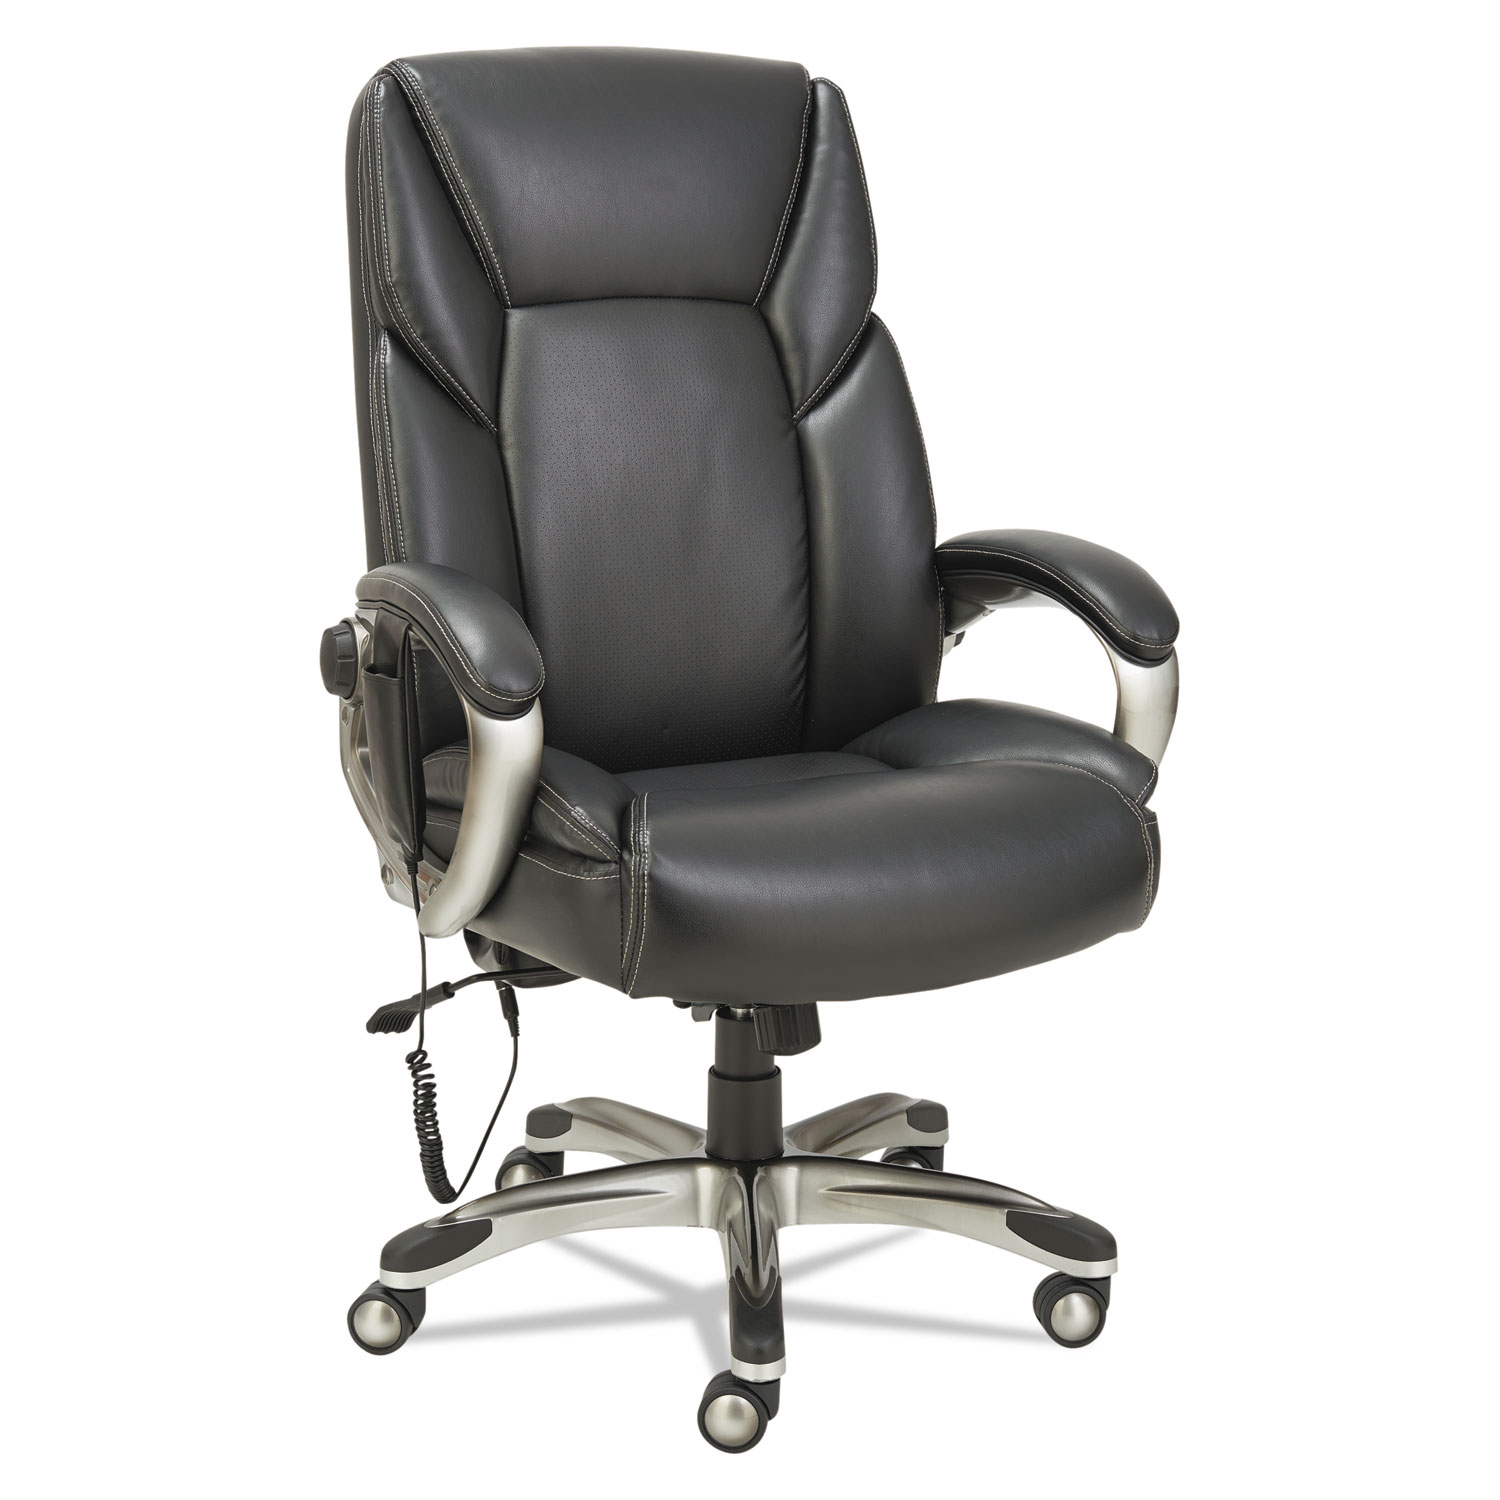  Alera ALESH7019 Shiatsu Massage Chair, Supports up to 275 lbs., Black Seat/Black Back, Silver Base (ALESH7019) 